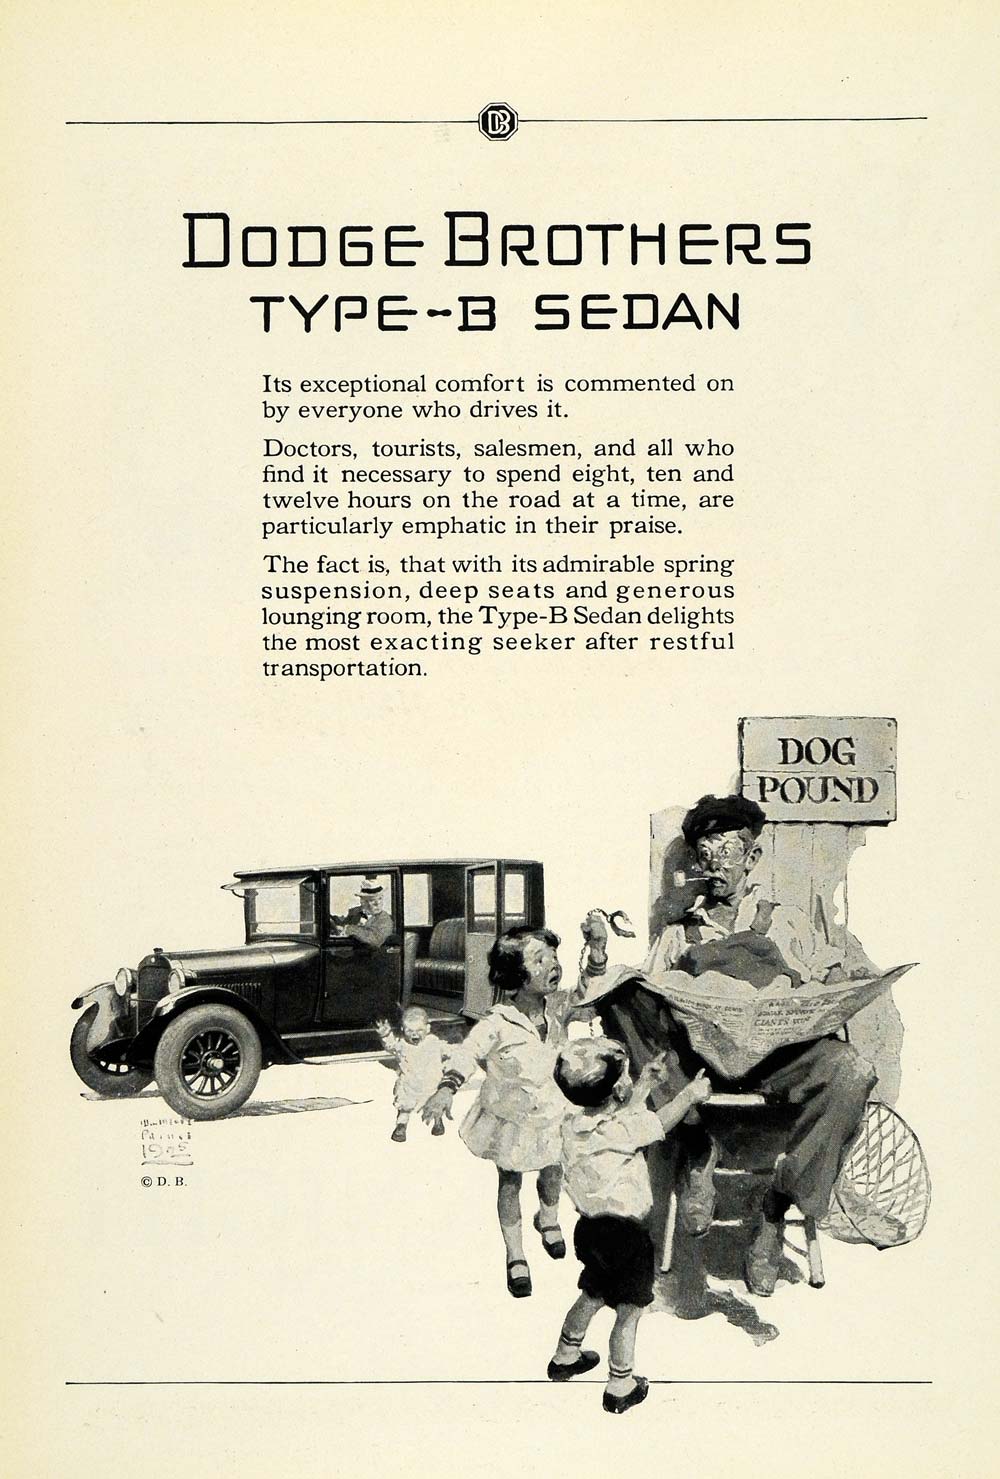 1925 Ad Dodge Brothers Type-B Sedan Automobile Dog Pound Children Baby W NGM1